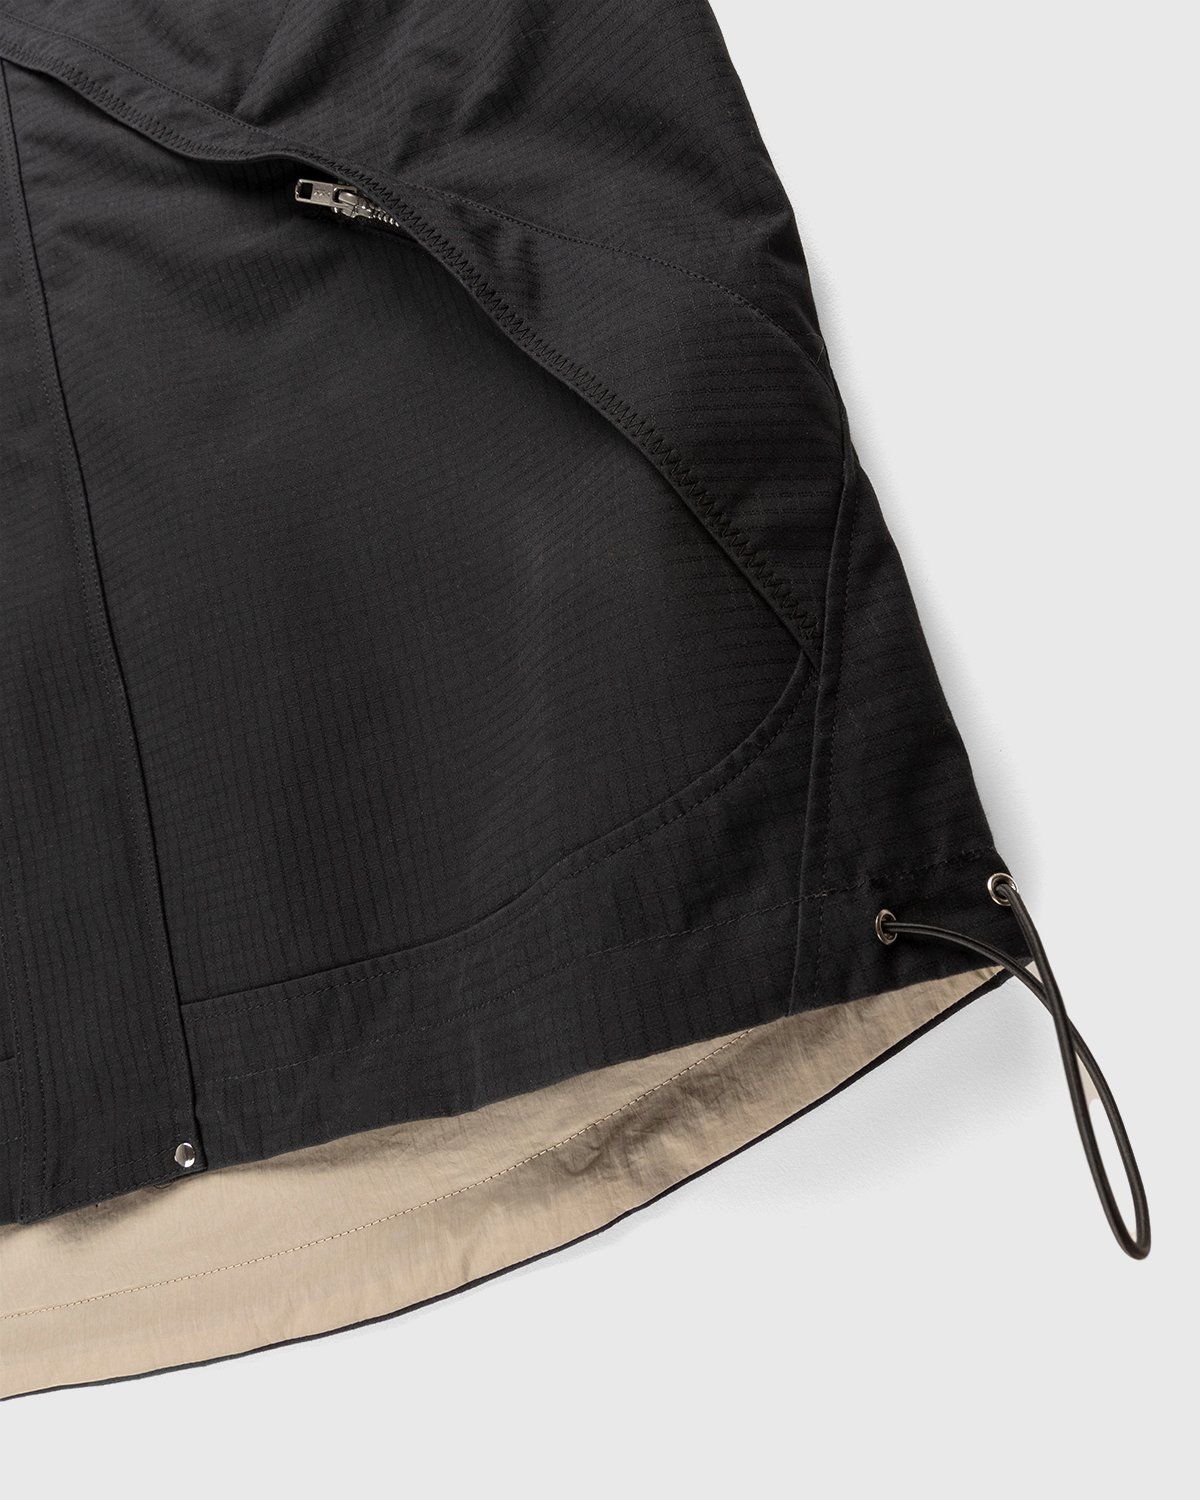 Arnar Mar Jonsson – Ventile Cross Pocket Outerwear Jacket Lava Beige - Outerwear - Brown - Image 5